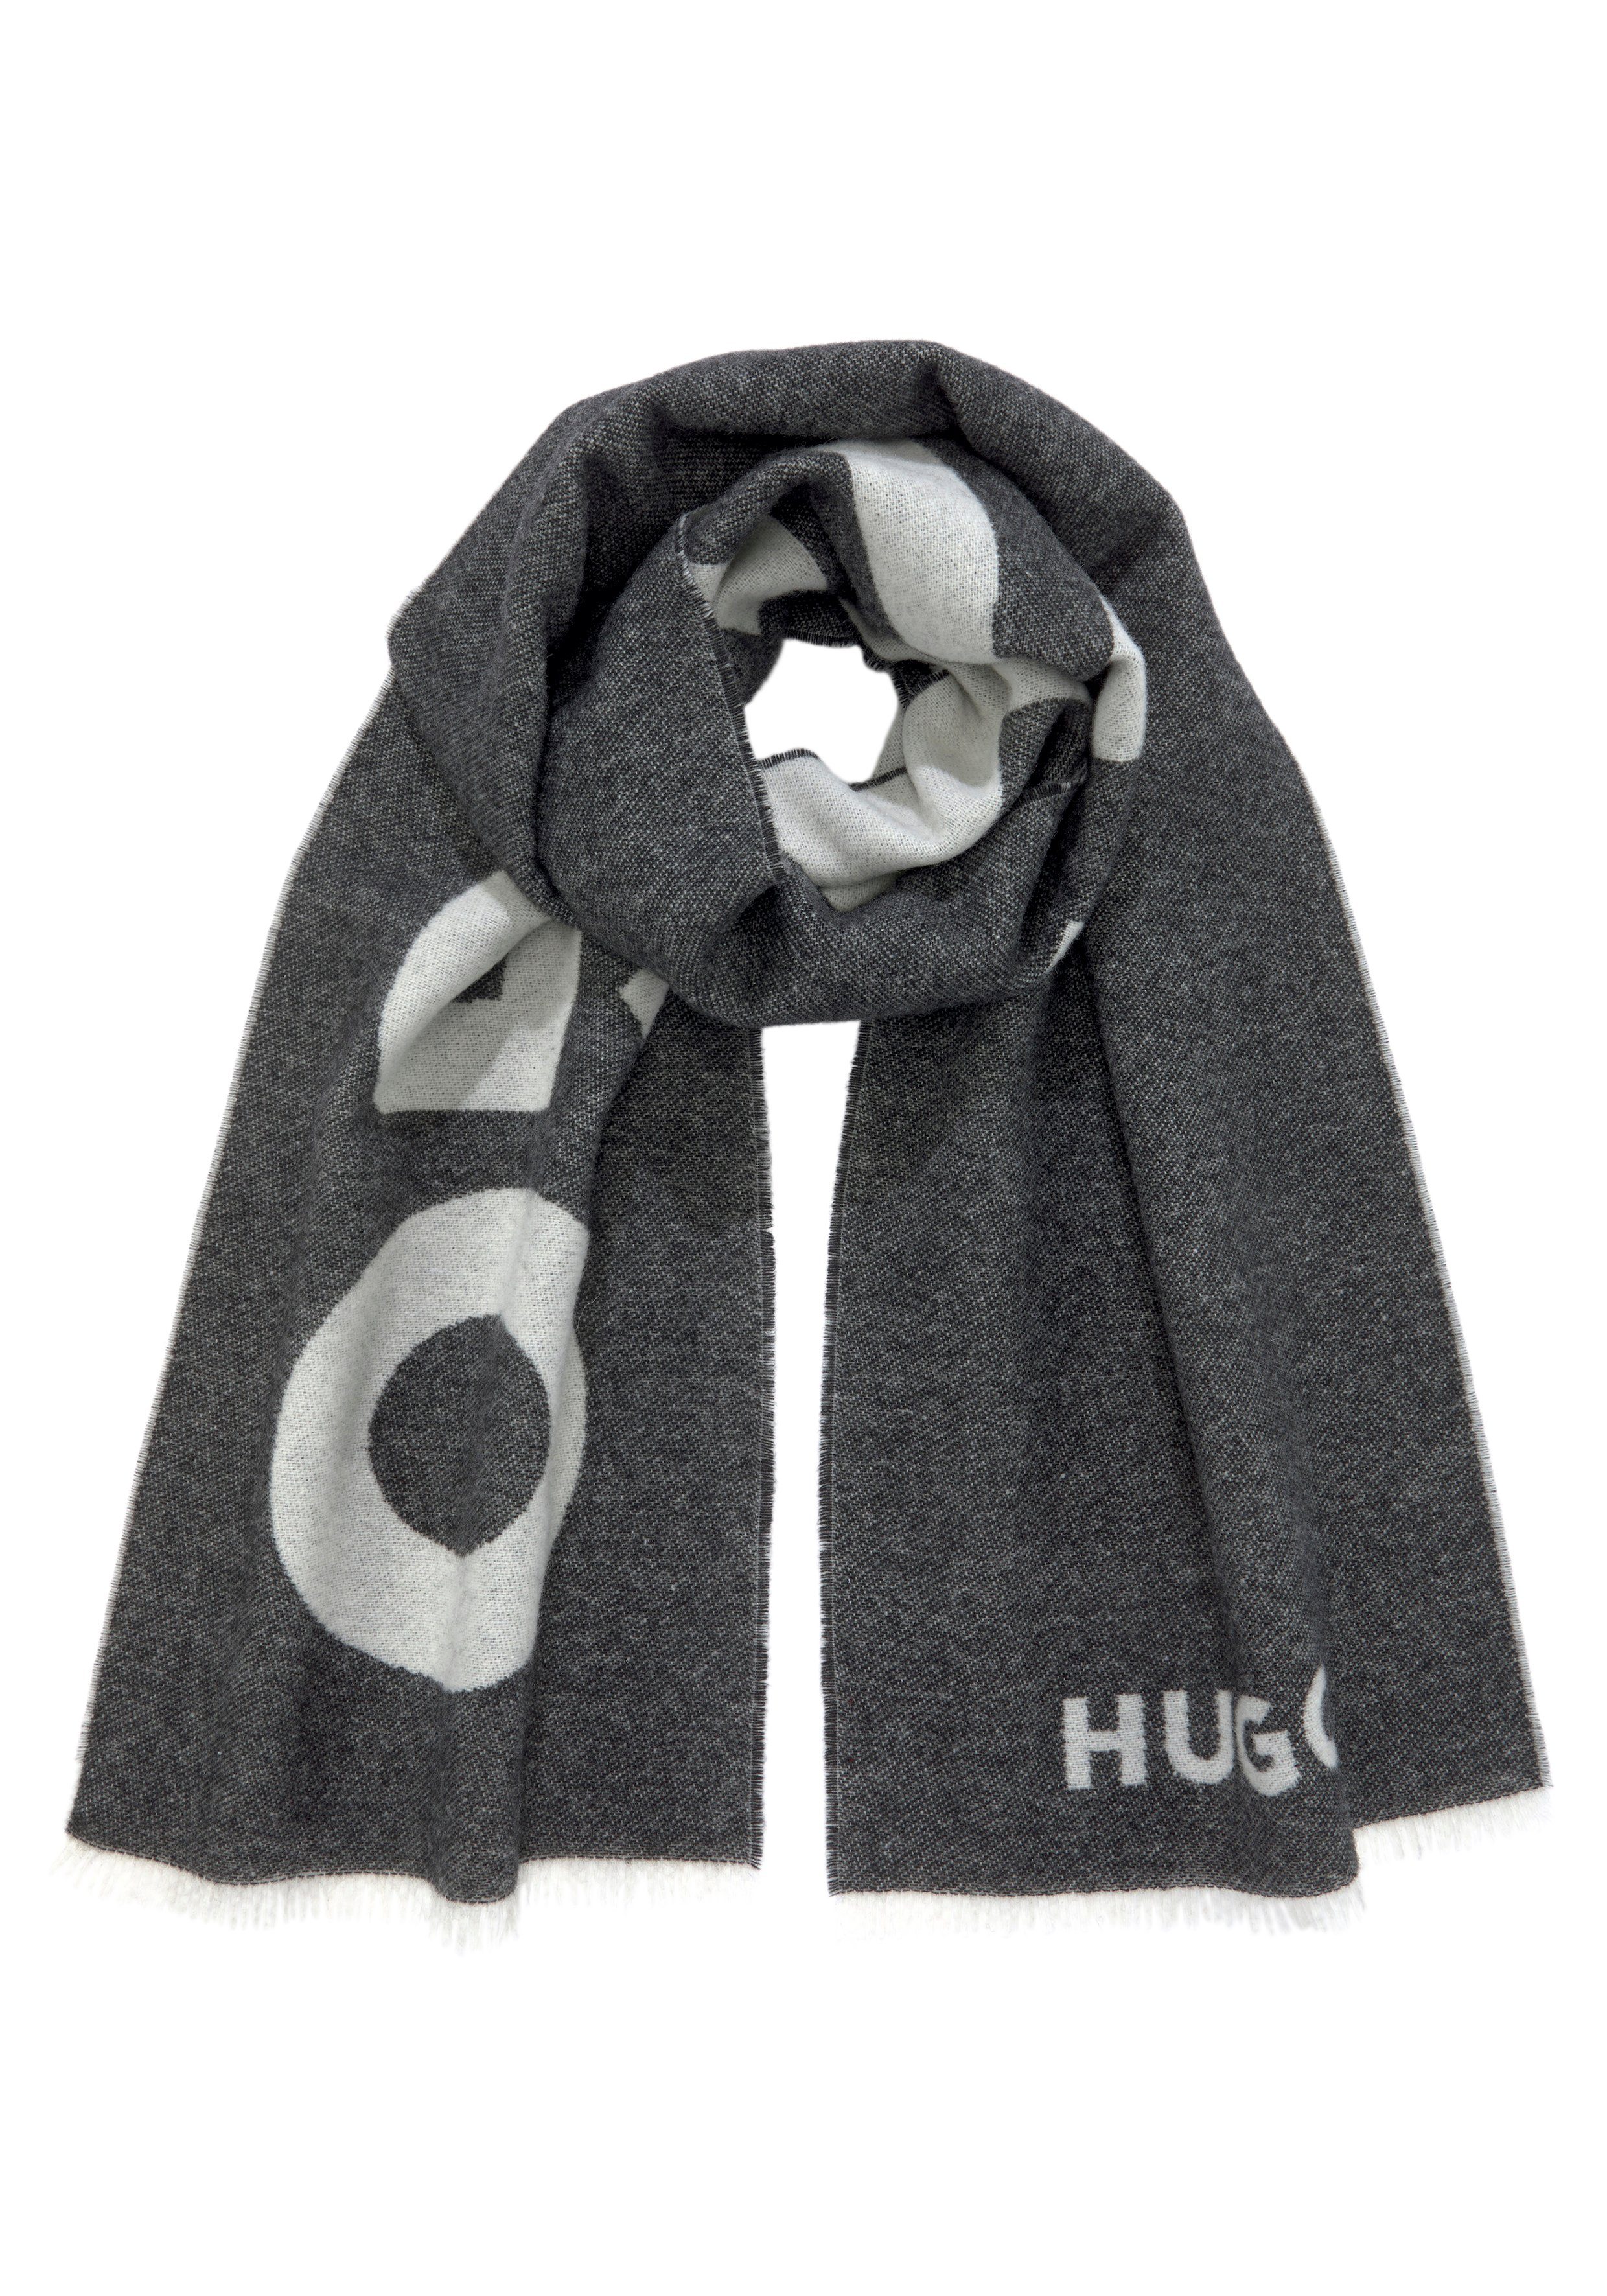 HUGO Schal 32 aus Schwarz mit cm Alexie, Woll-Mix (001) Kontrastfarbenem 200 x Hugo-Logo